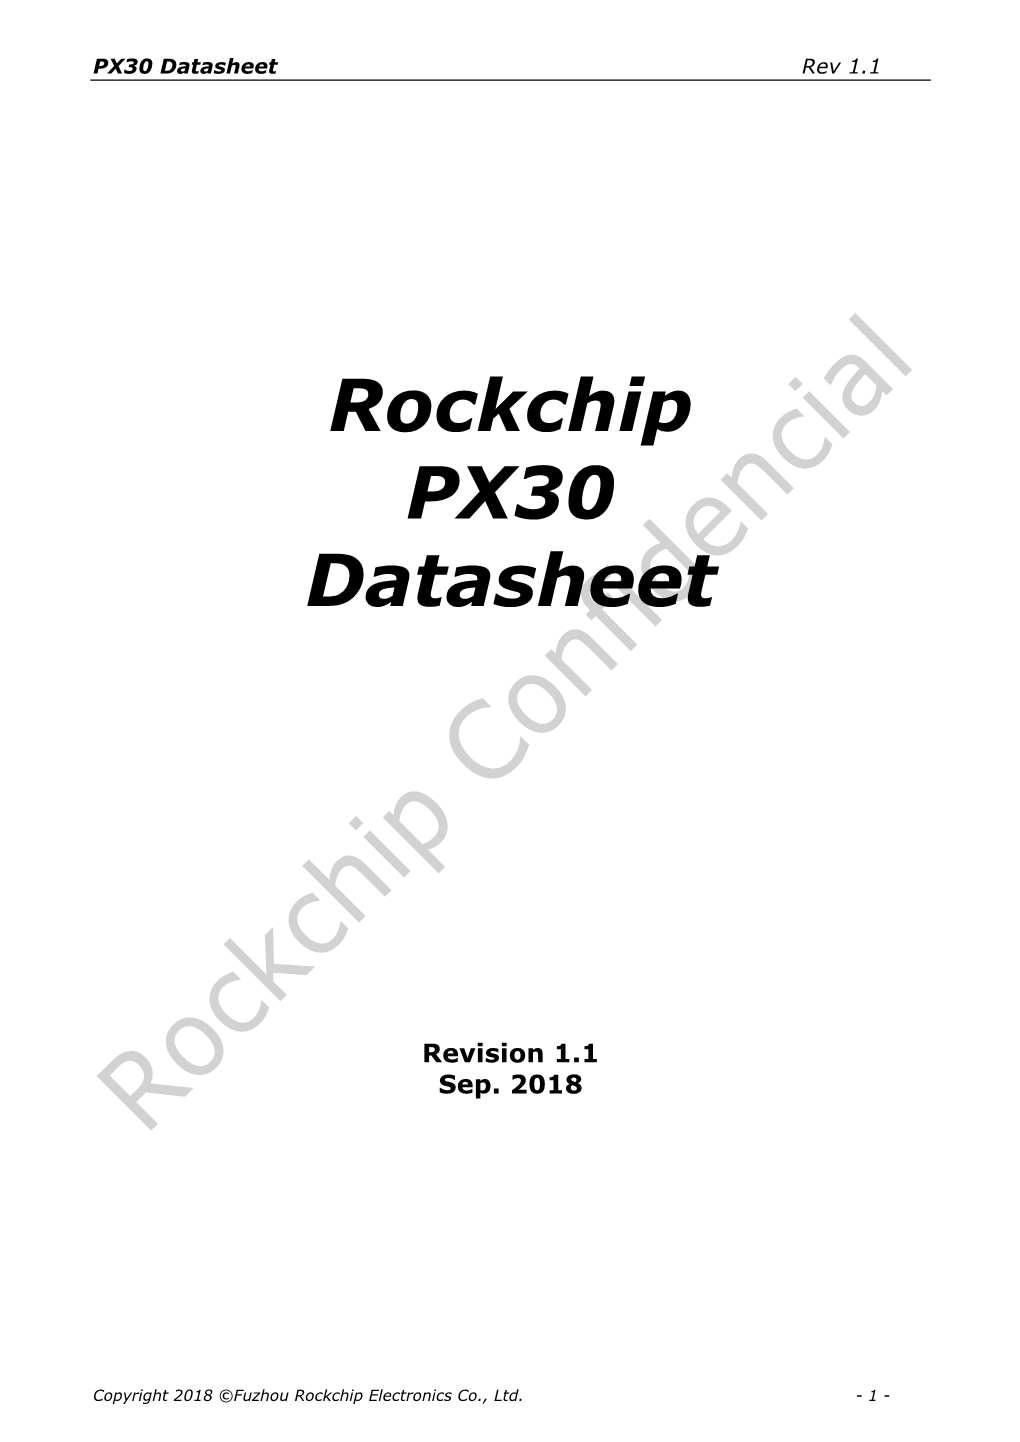 Rockchip PX30 Datasheet